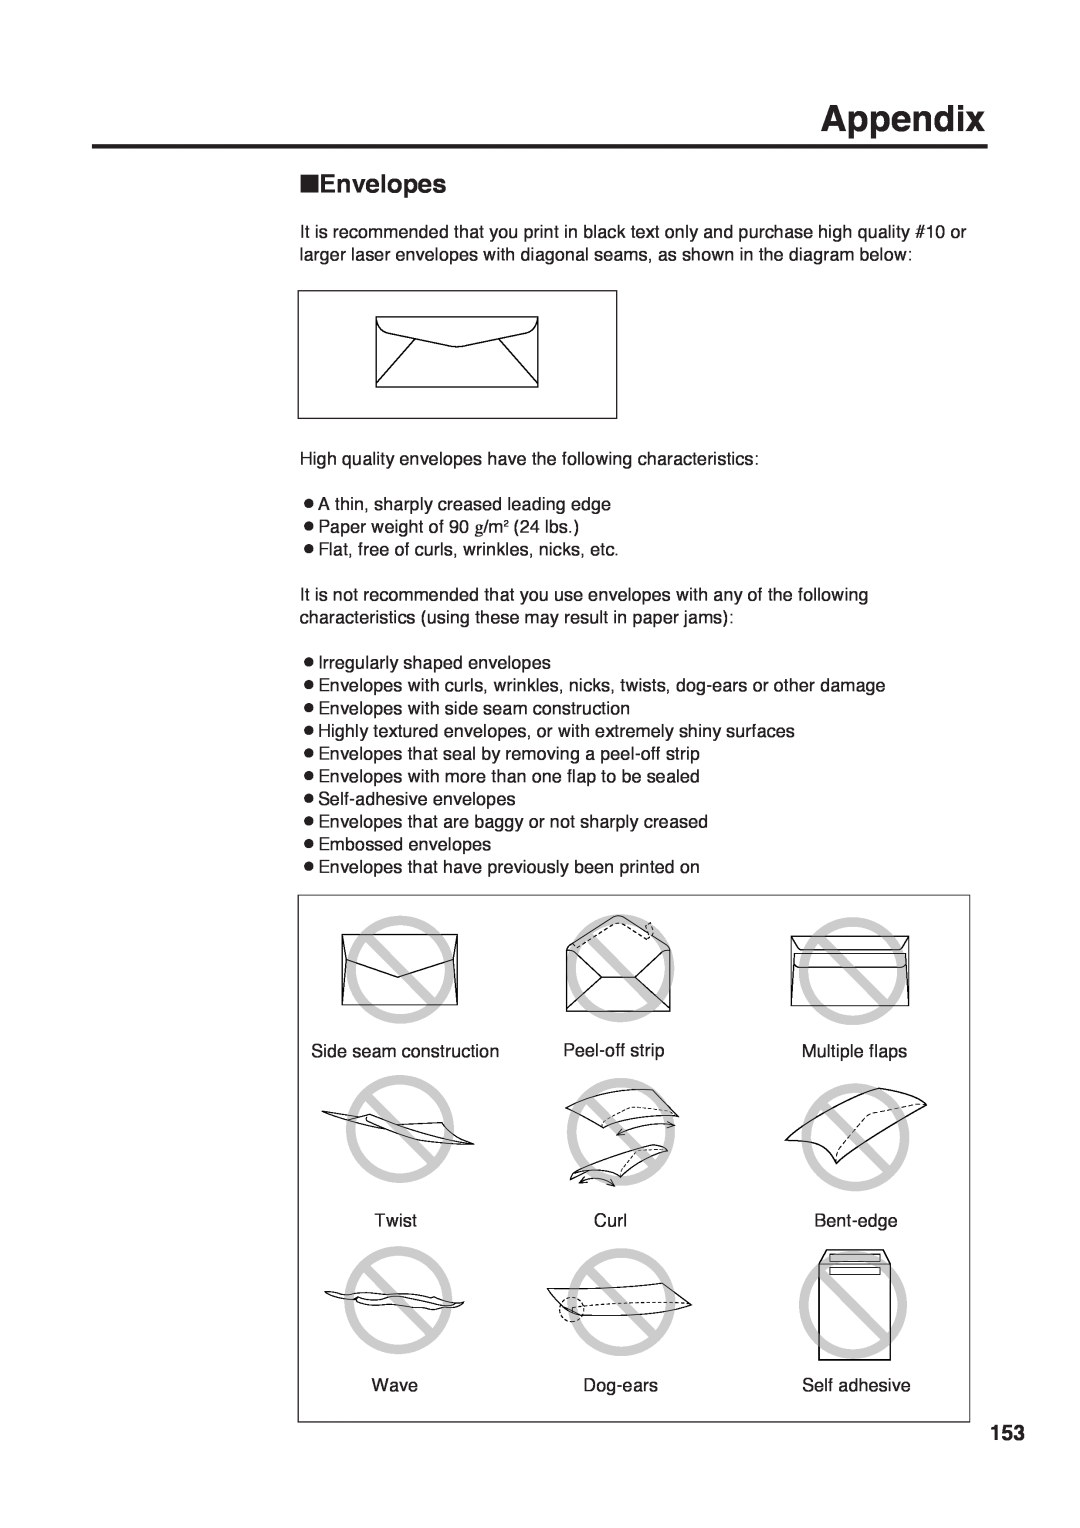 Panasonic KX-PS8000 manual Envelopes, Appendix 